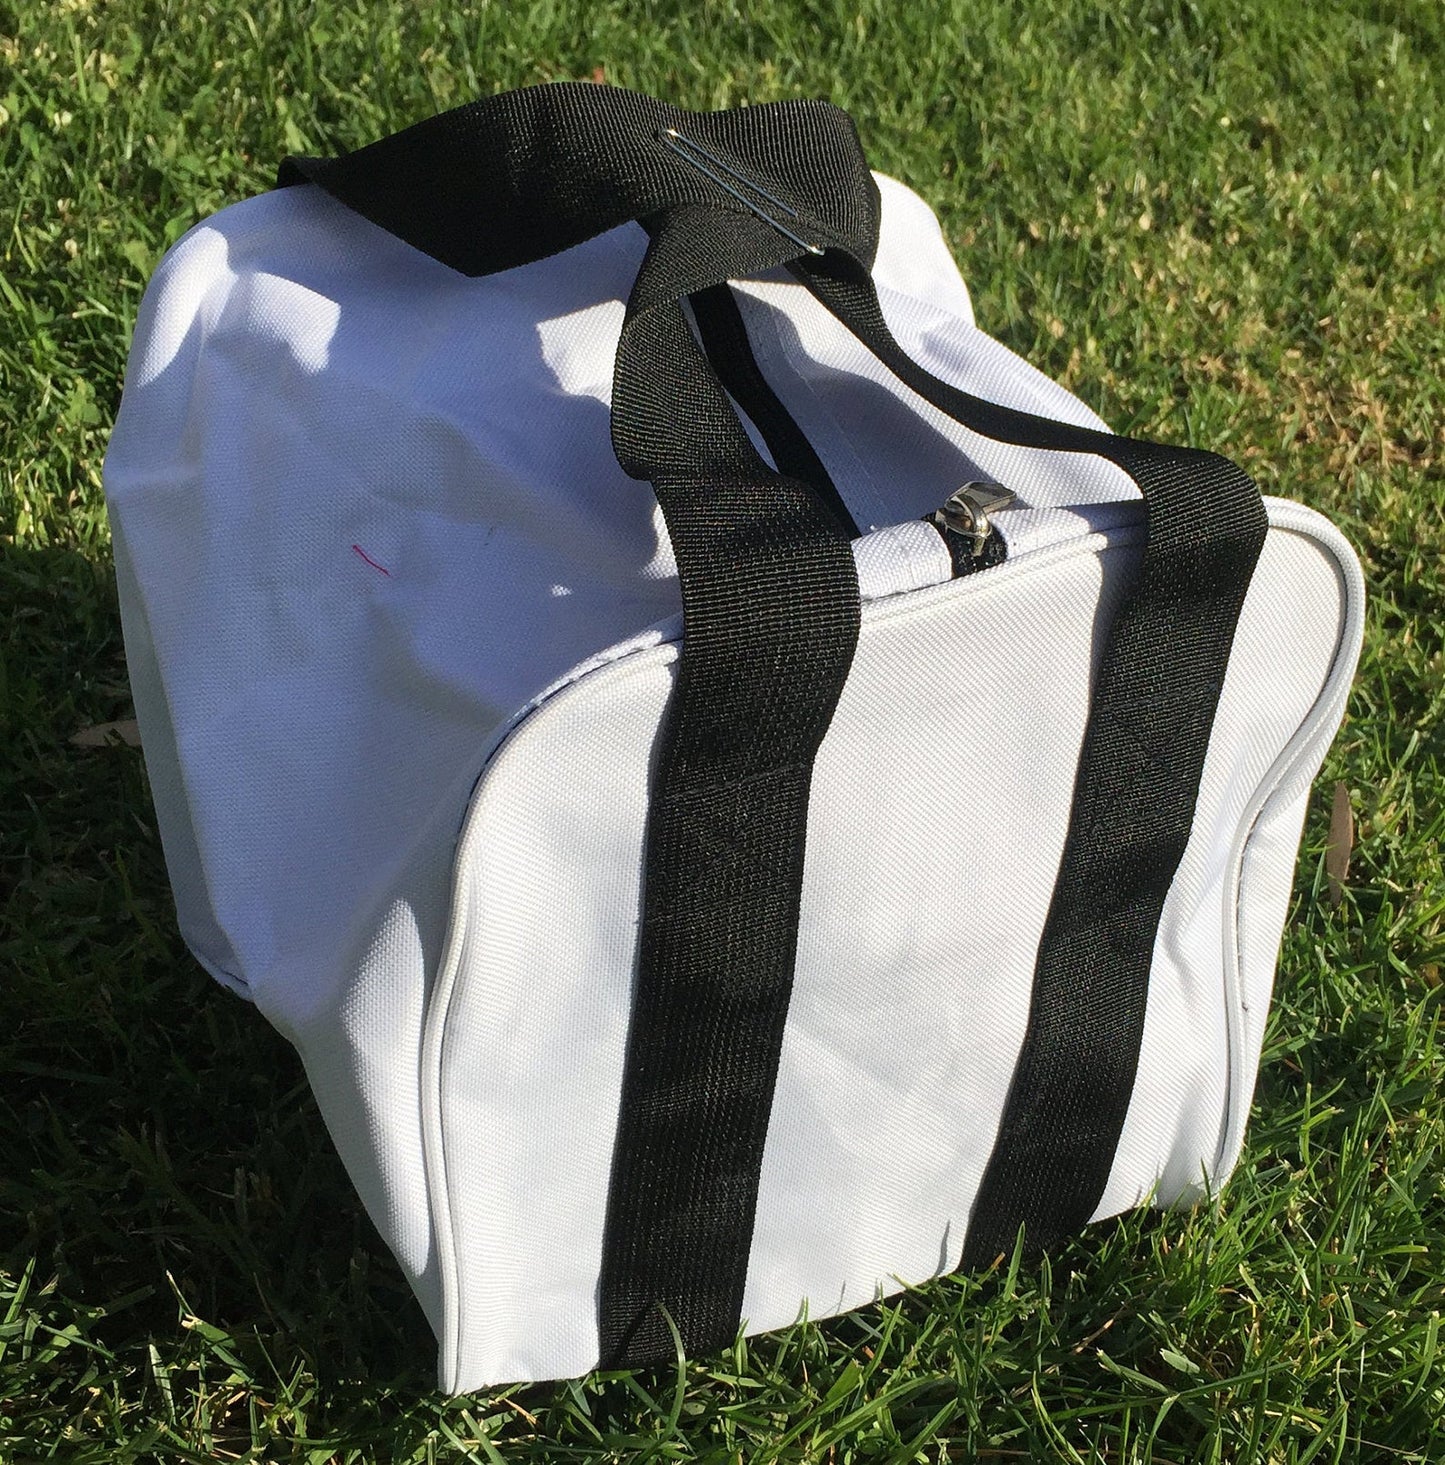 Heavy Duty Nylon Bocce Bag - White with Black Handles